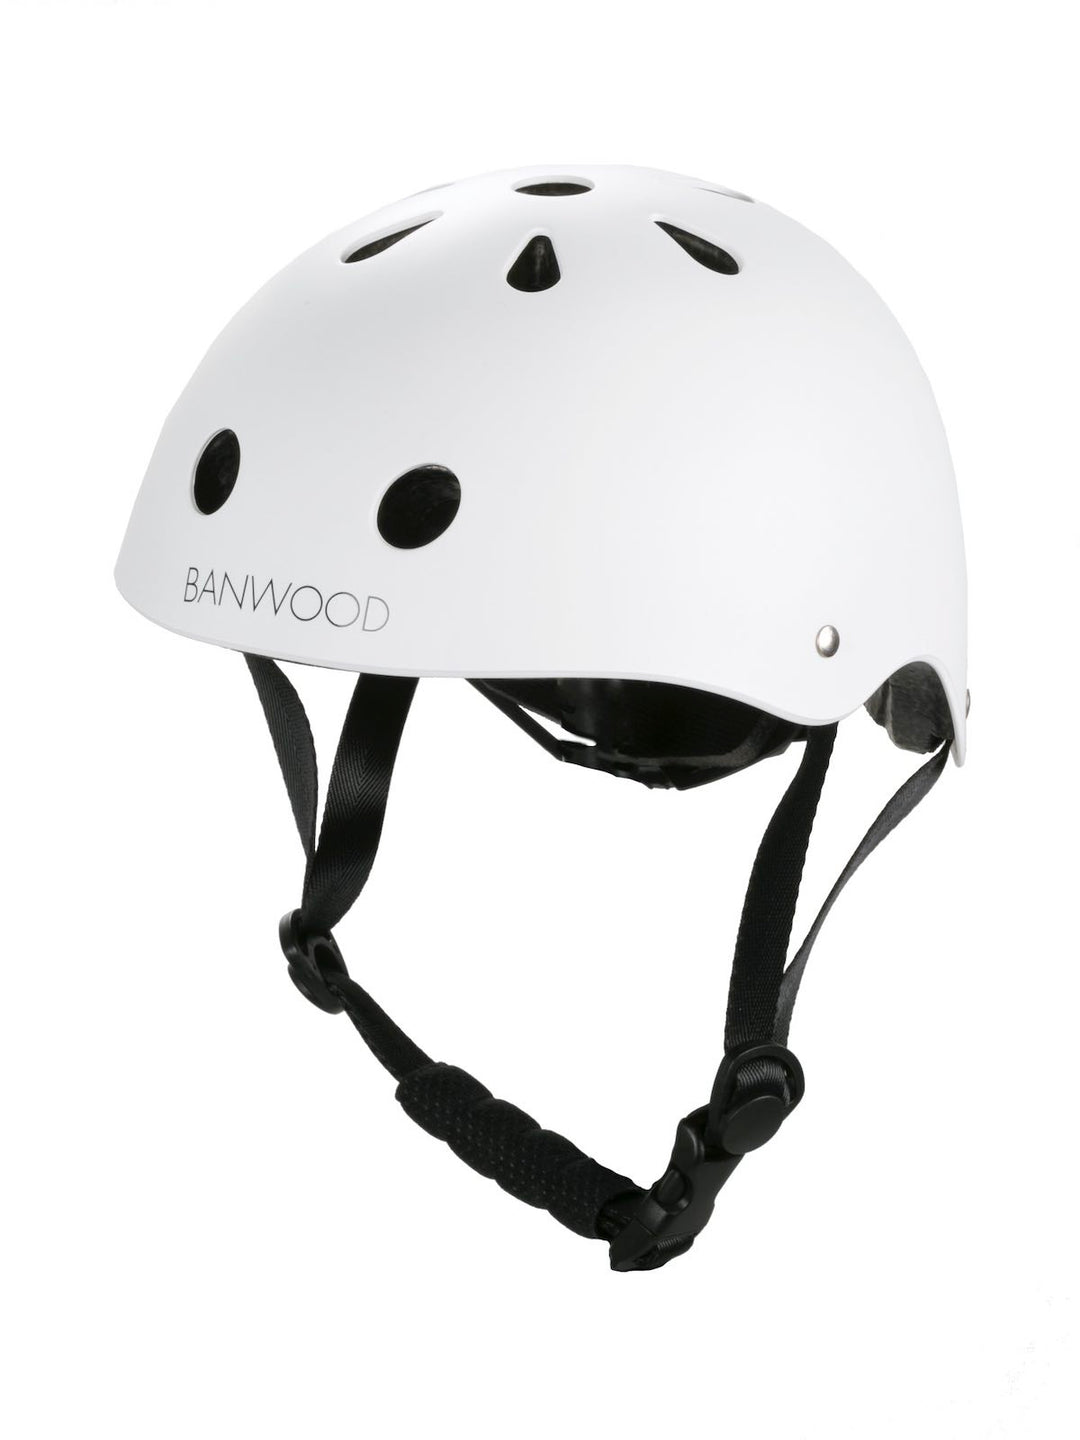 Banwood Classic Helmet in White